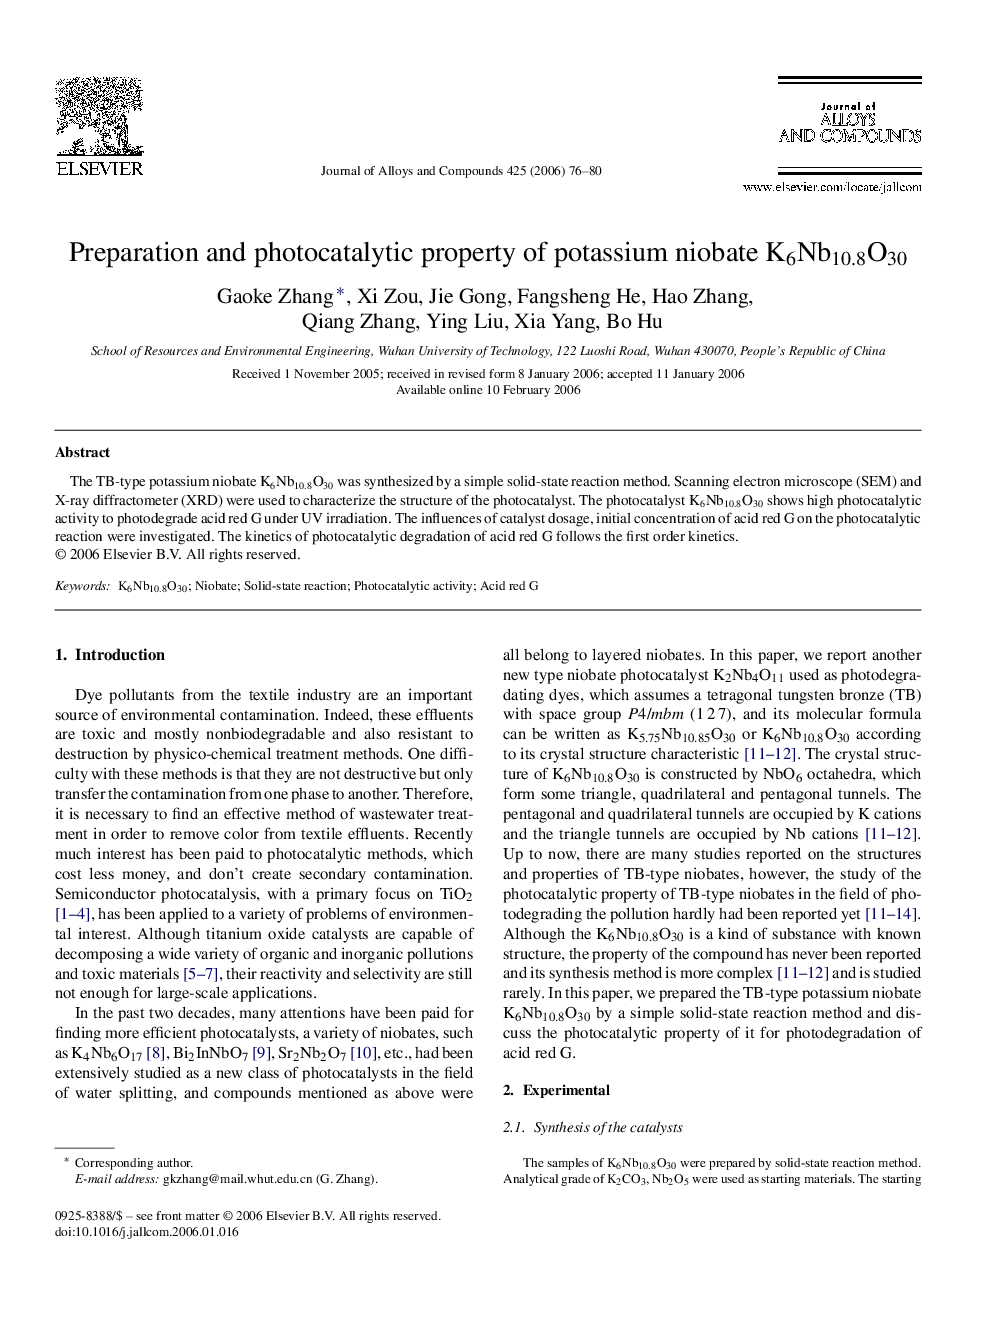 Preparation and photocatalytic property of potassium niobate K6Nb10.8O30